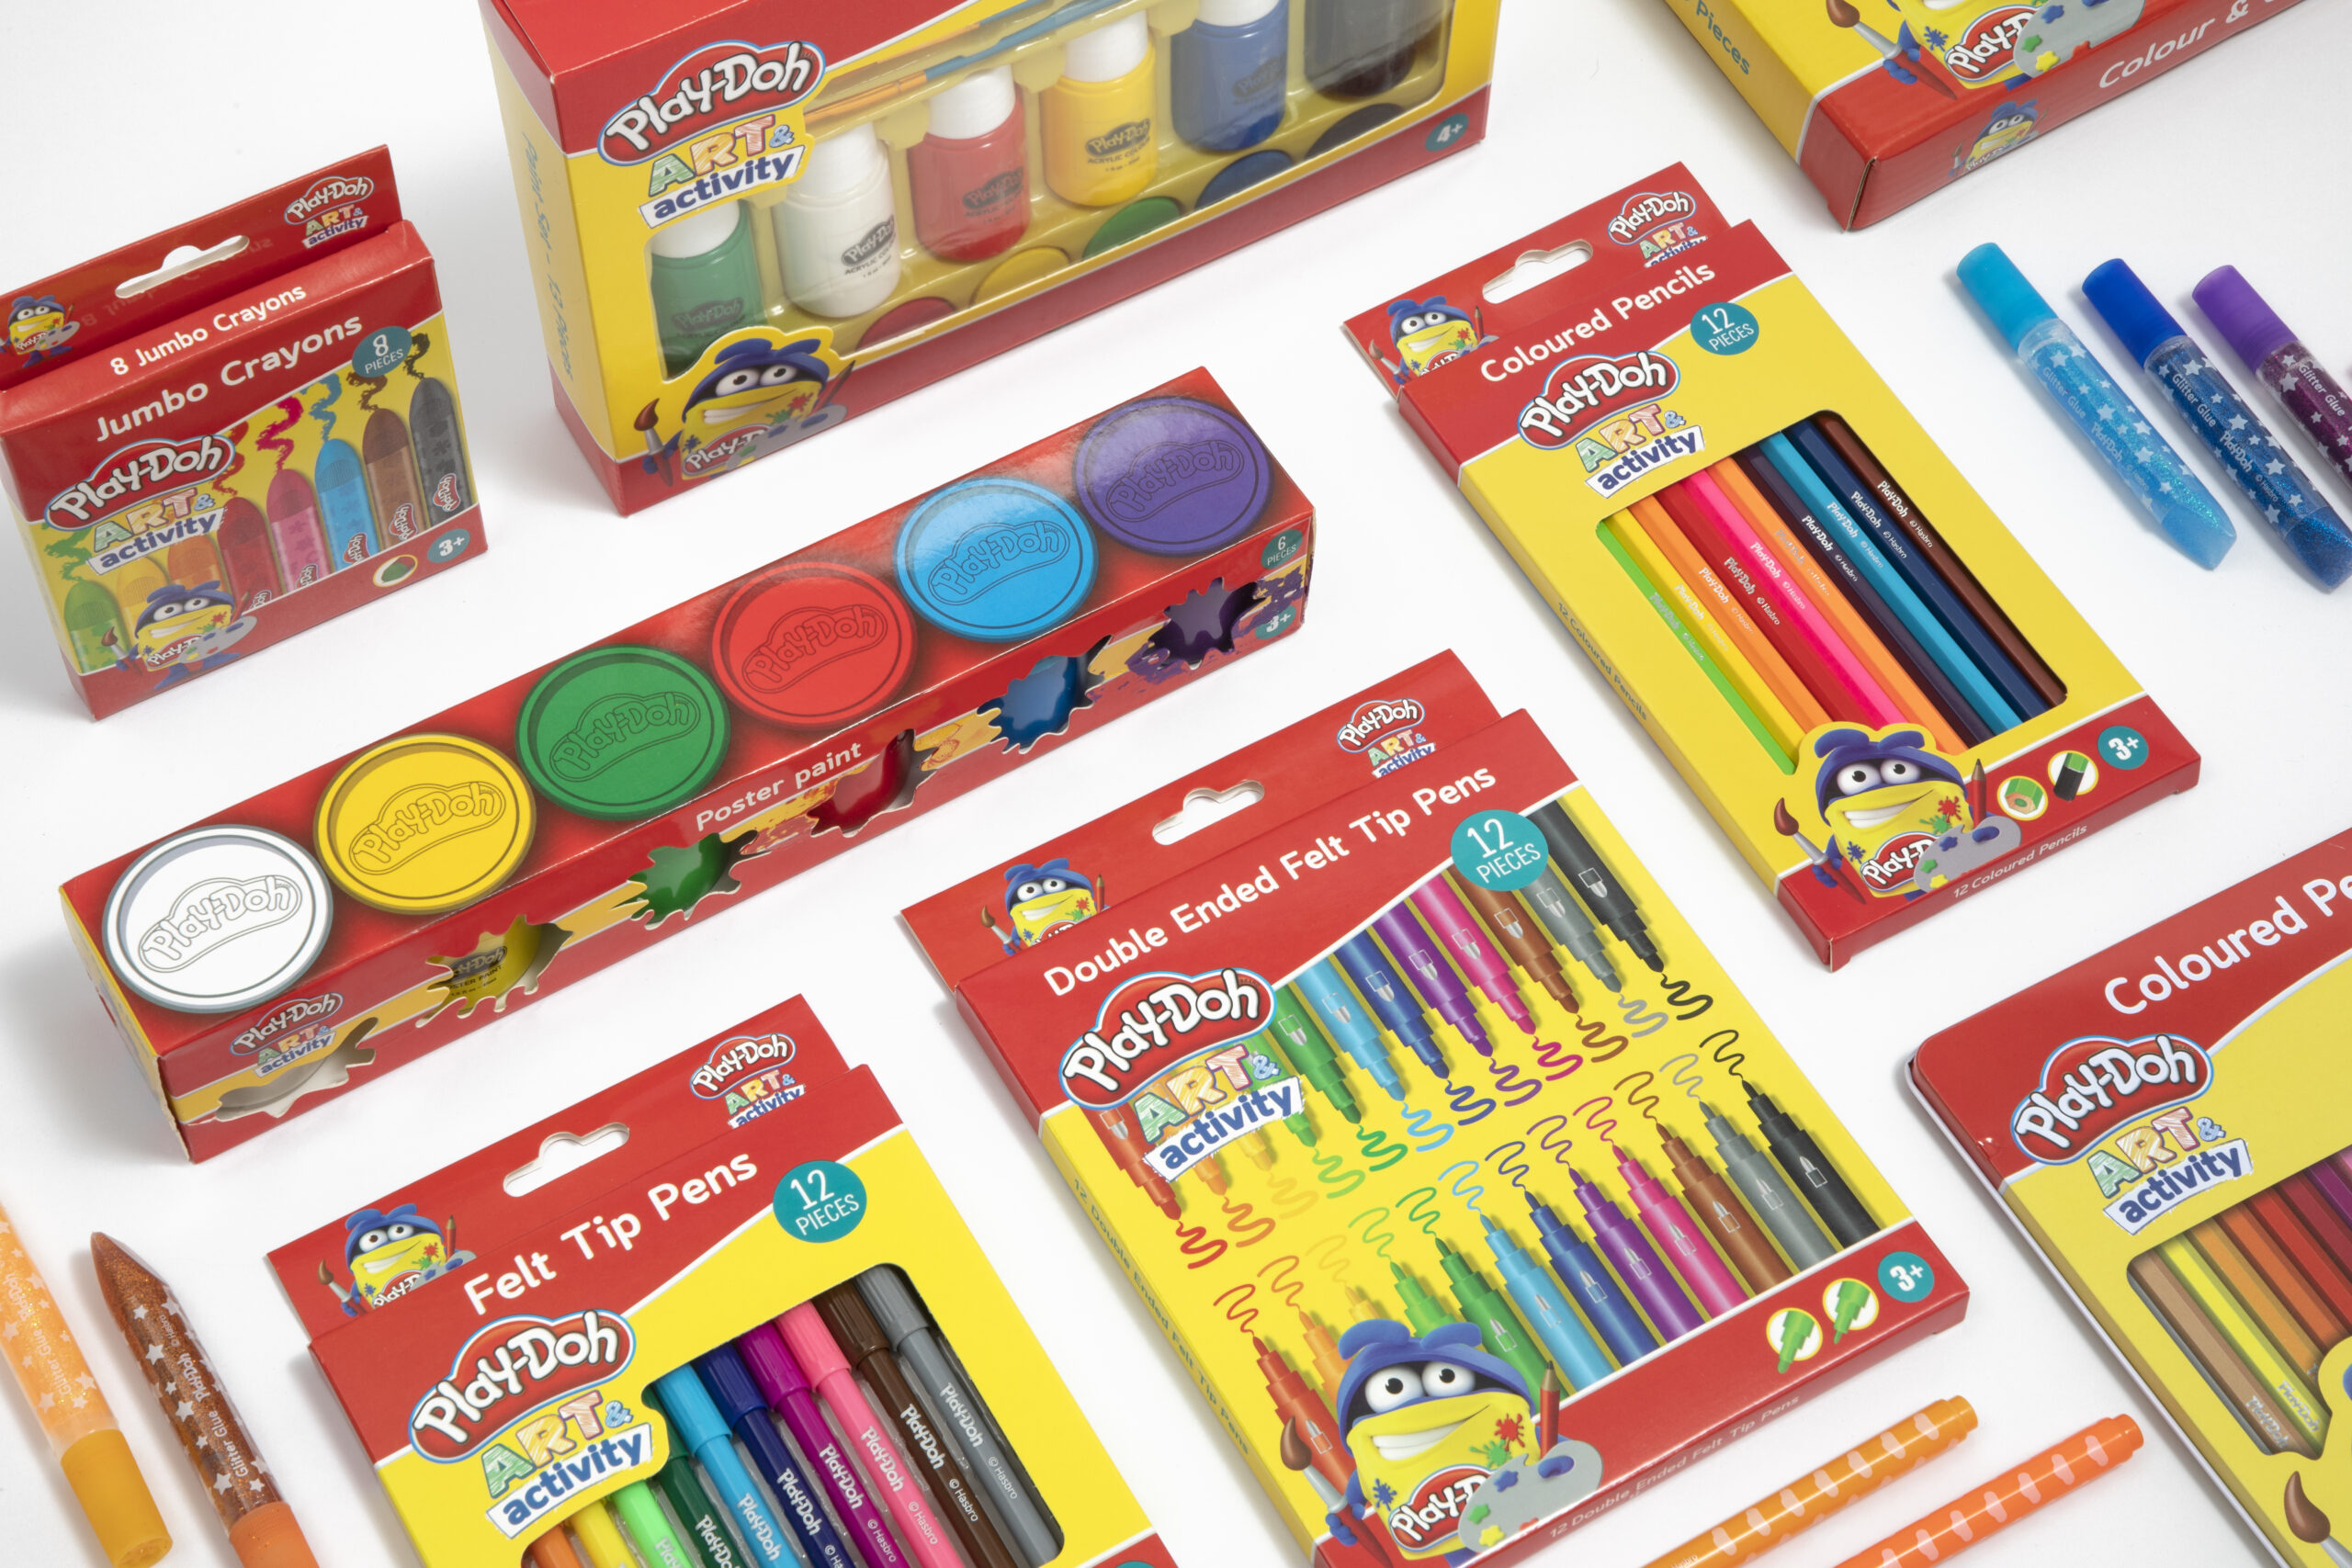 Play-Doh Jumbo Crayons 8-set